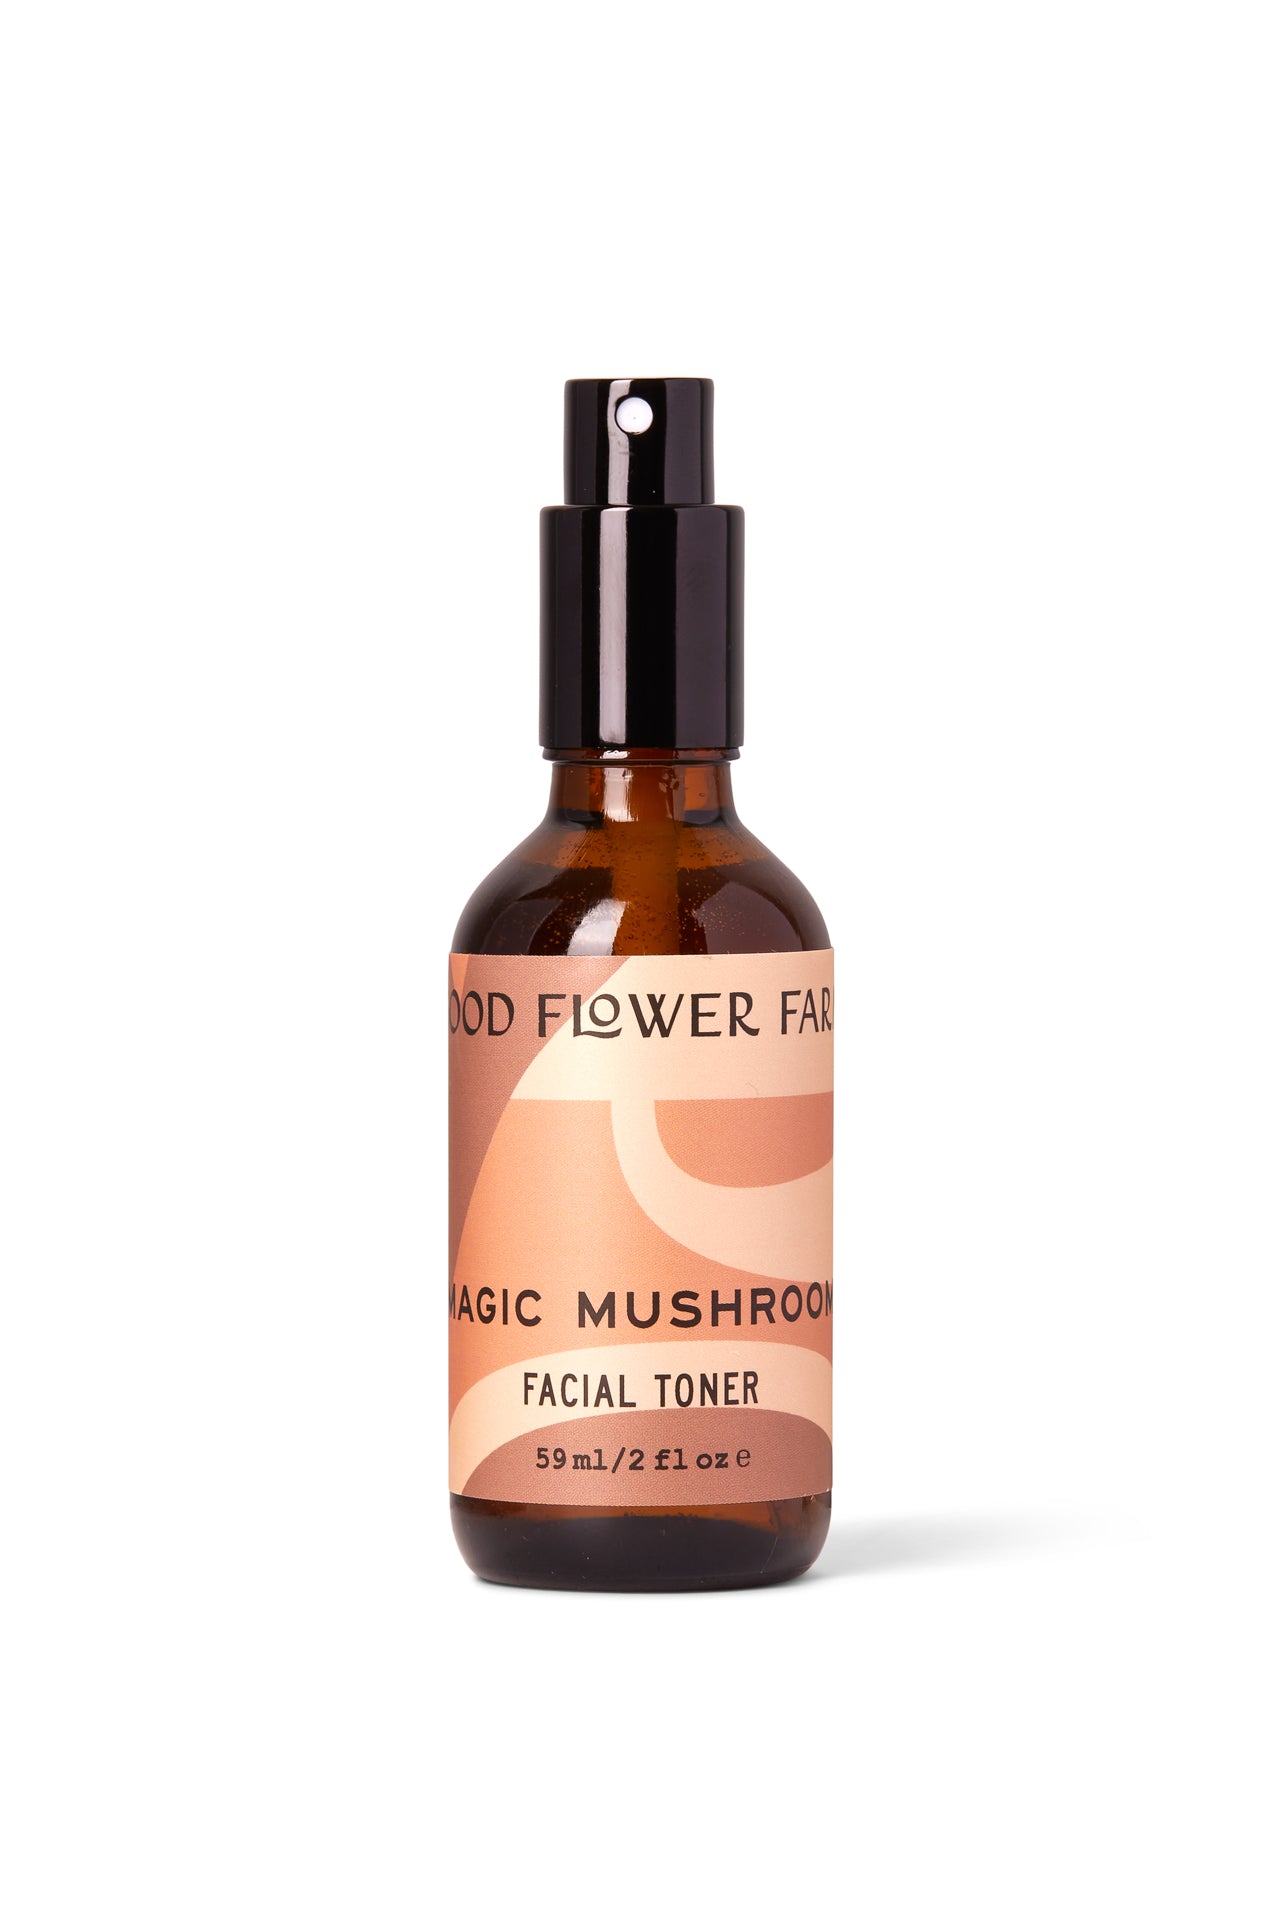 Magic Mushroom Organic Herbal Facial Toner by Good Flower Farm